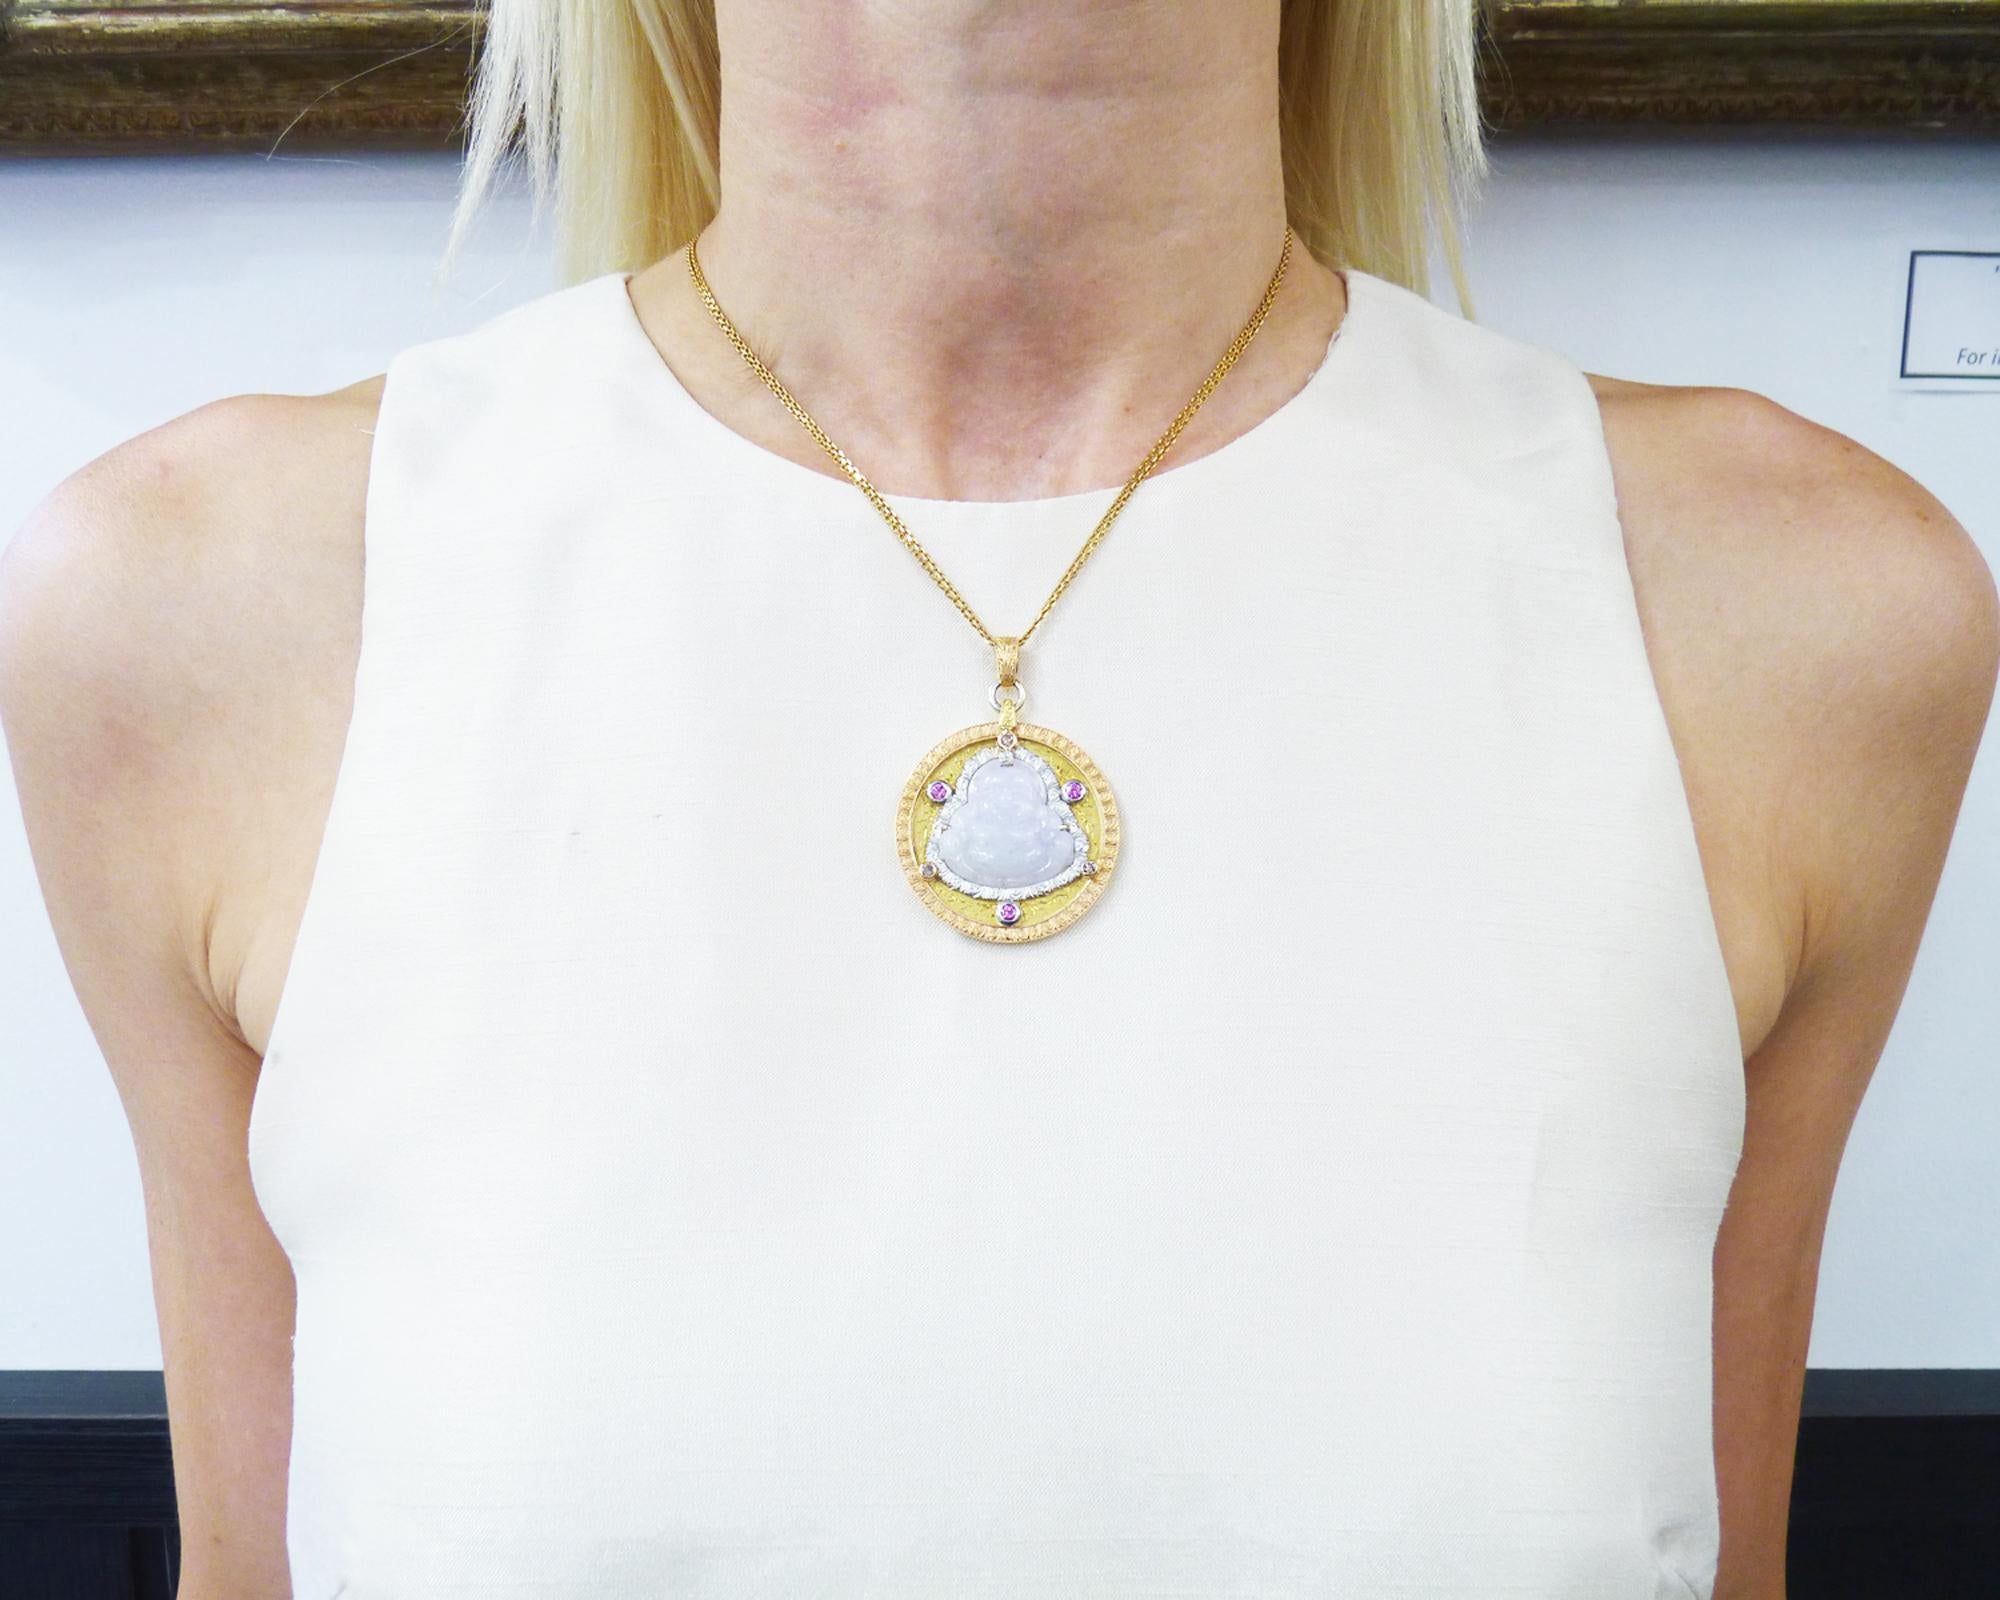 Contemporary Cazzaniga Pendant in 18 Karat Yellow Gold with Diamonds, Ruby and Lavender Jade